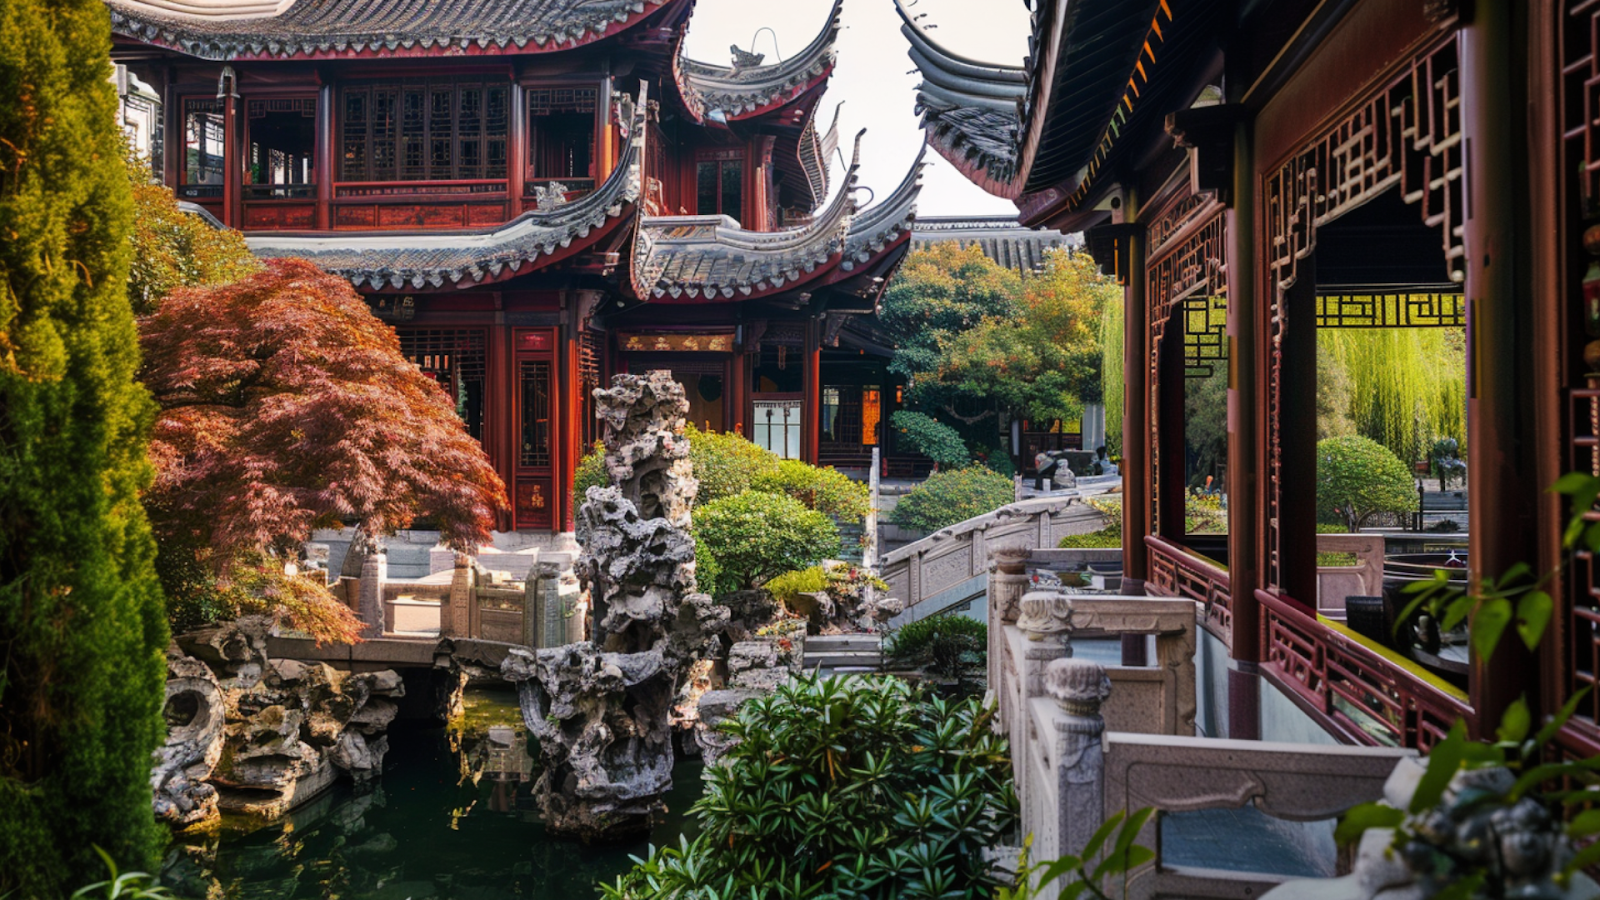 The Yu Garden in Shanghai, China